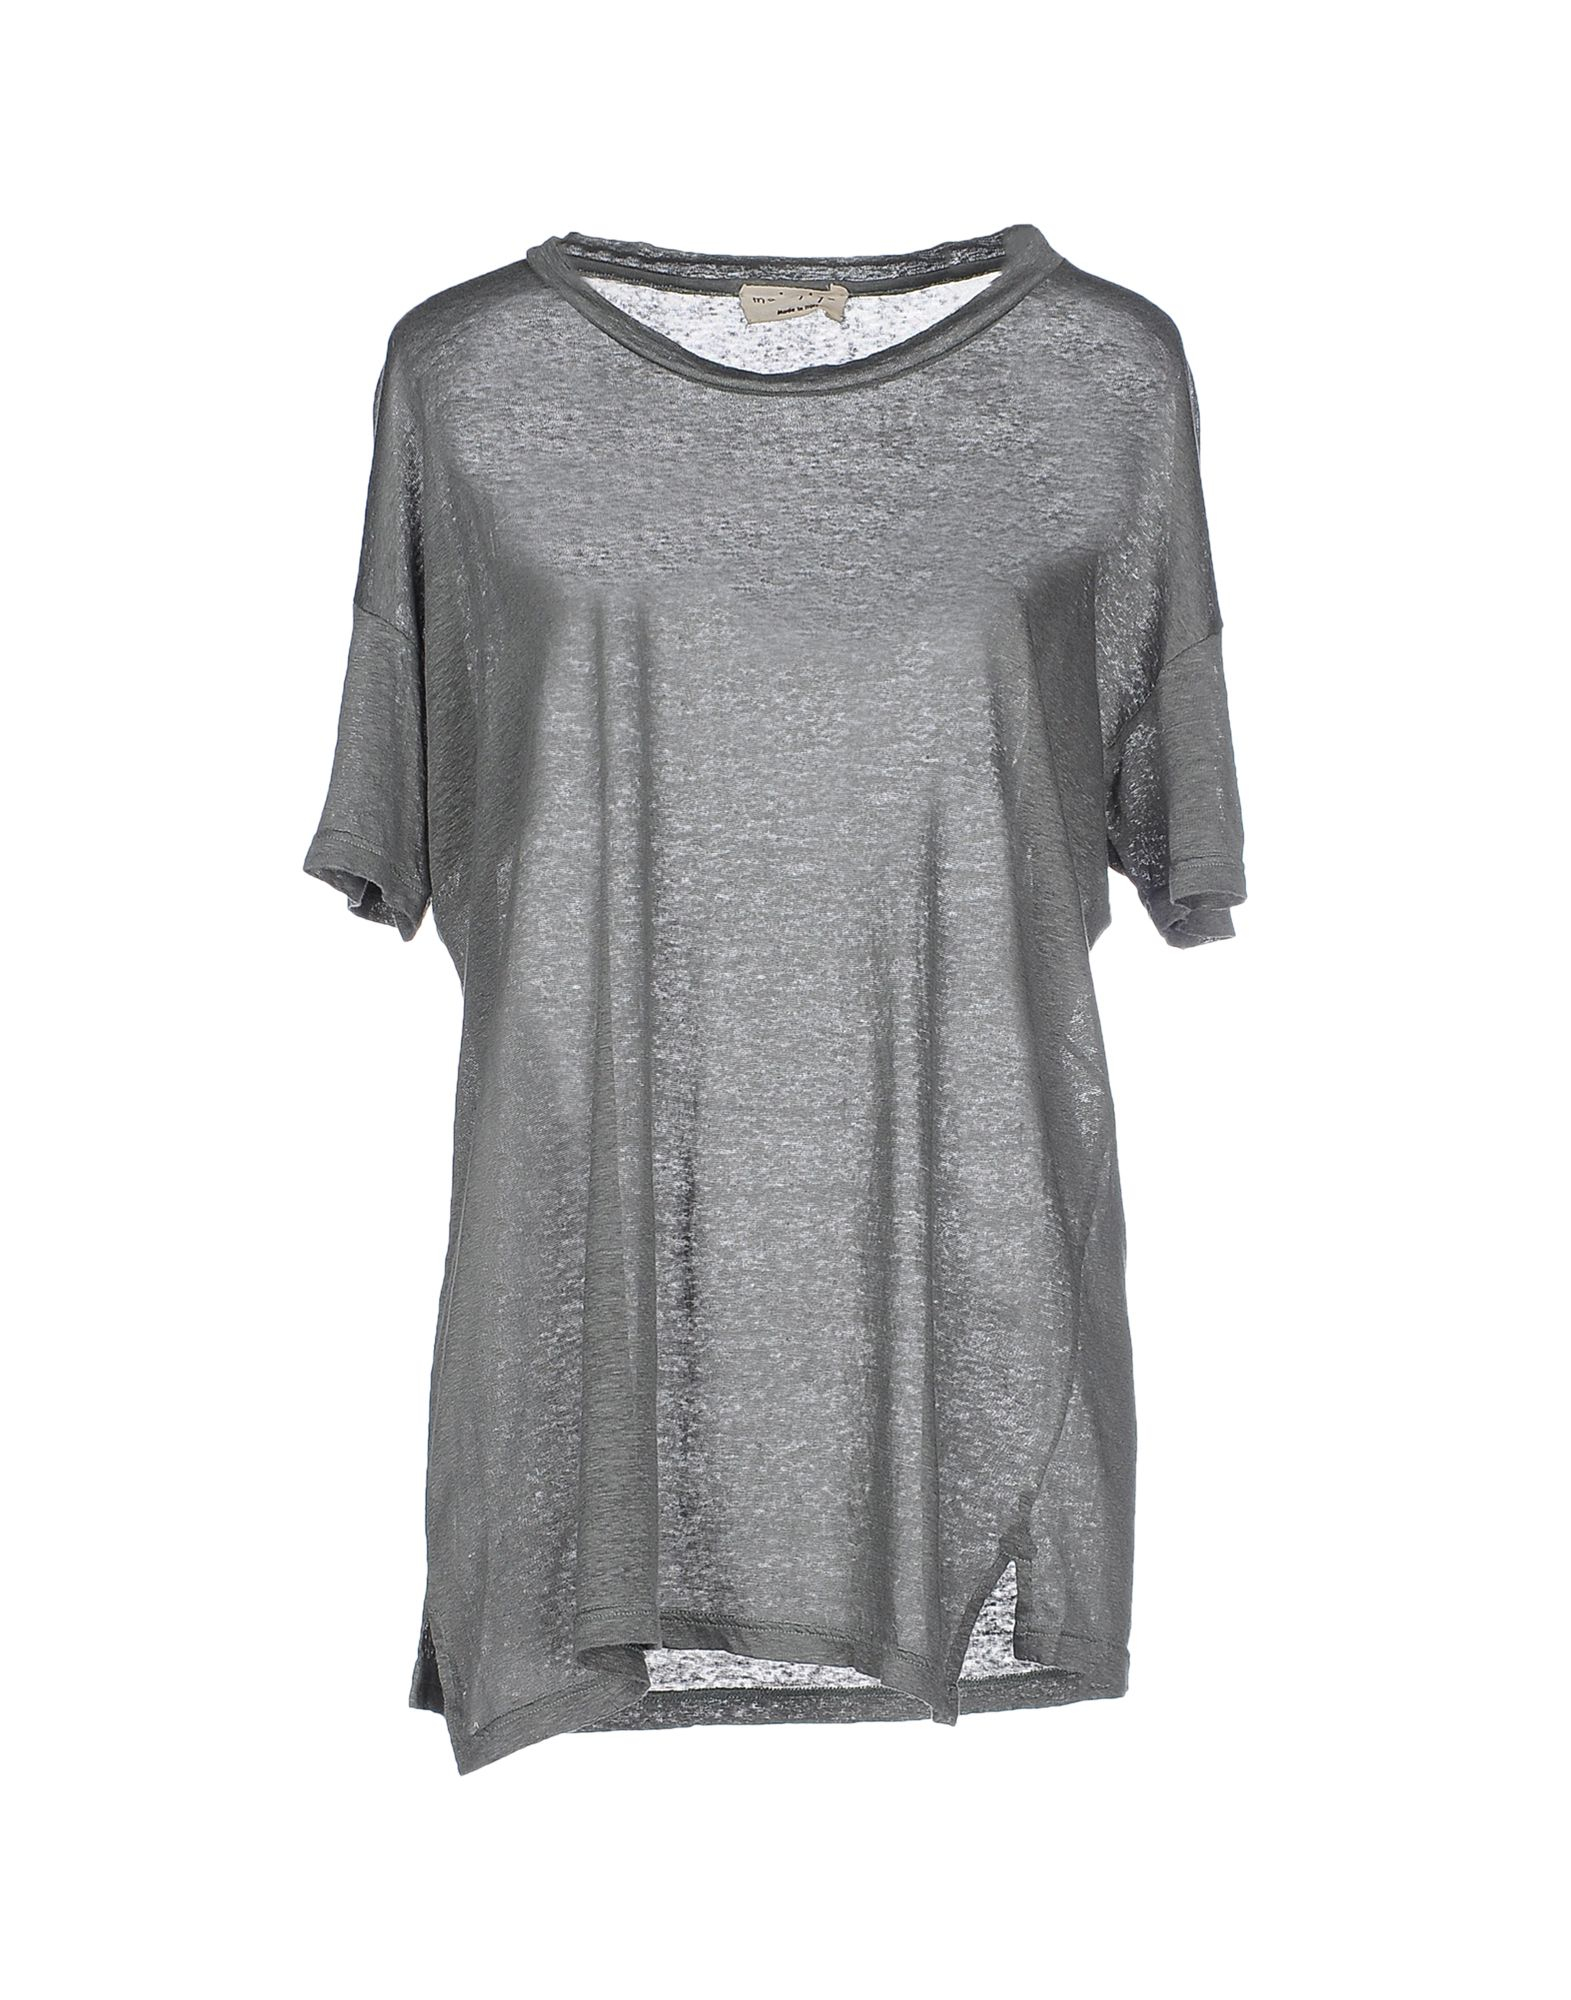 Ma'ry'ya T-shirt in Gray (Grey) - Save 59% | Lyst